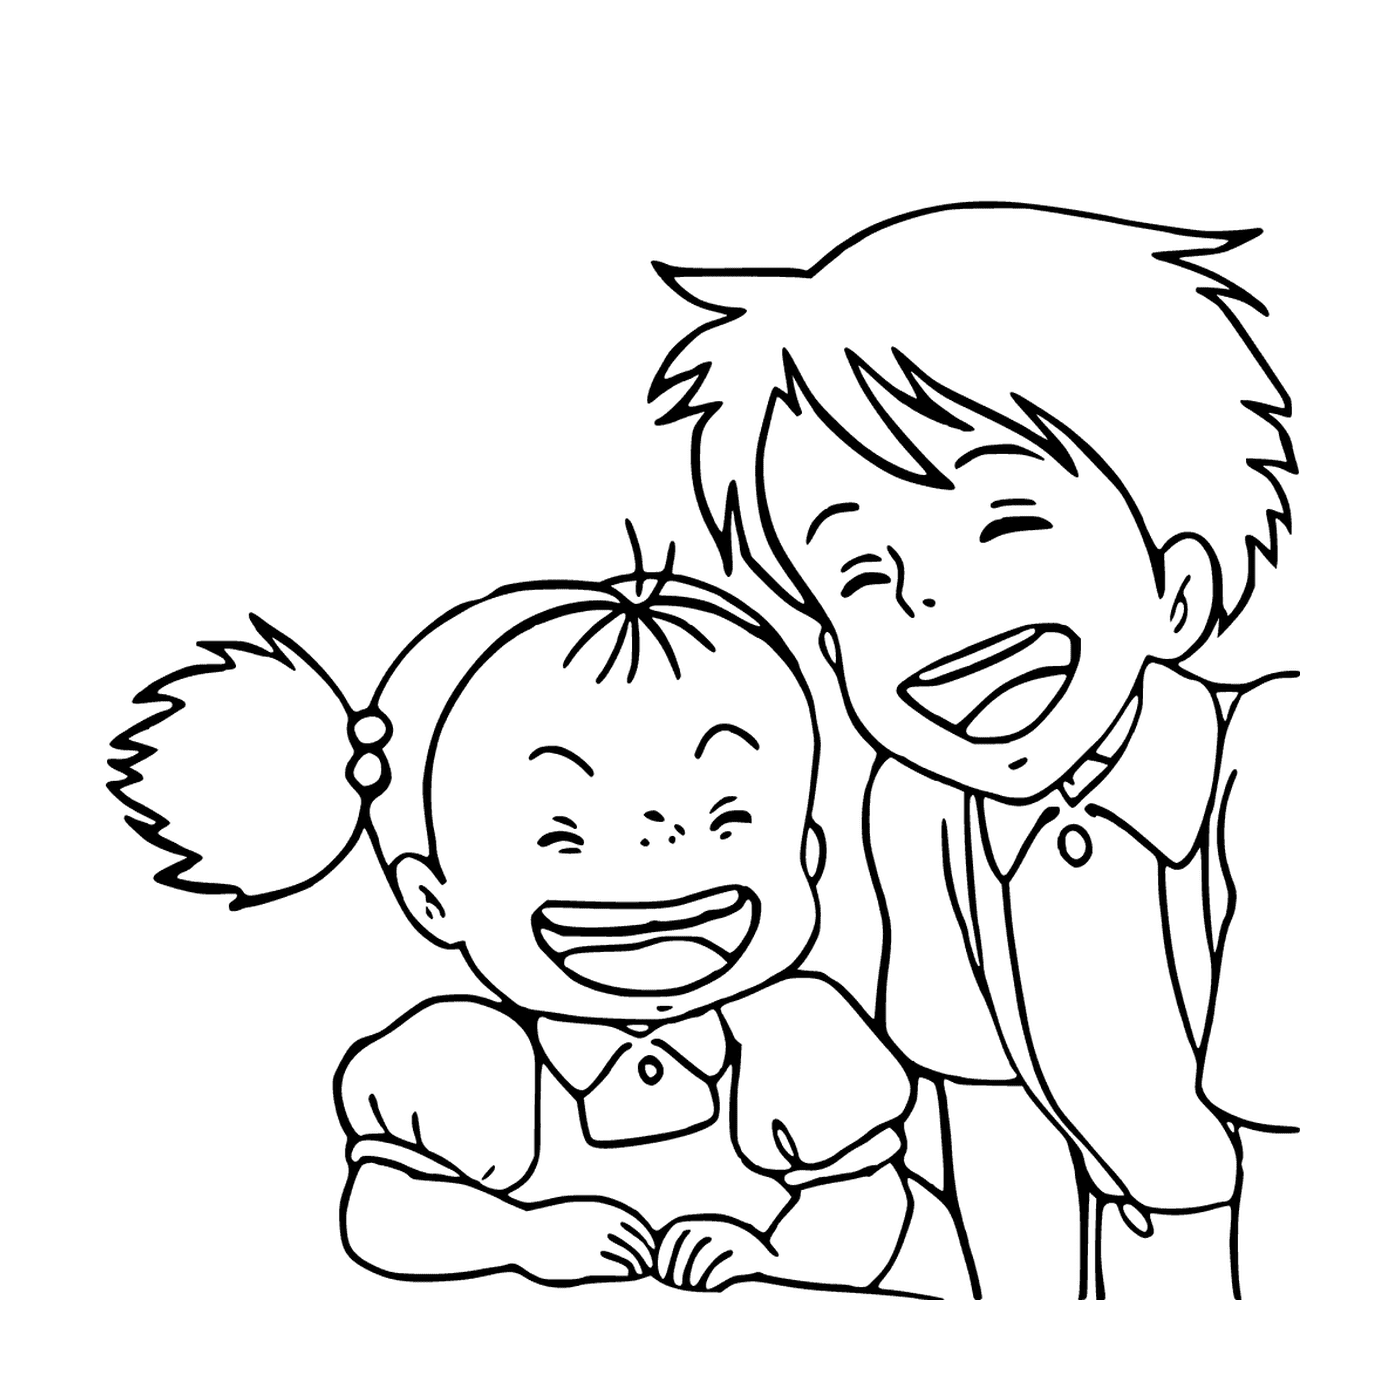  Menino e menina rindo juntos 